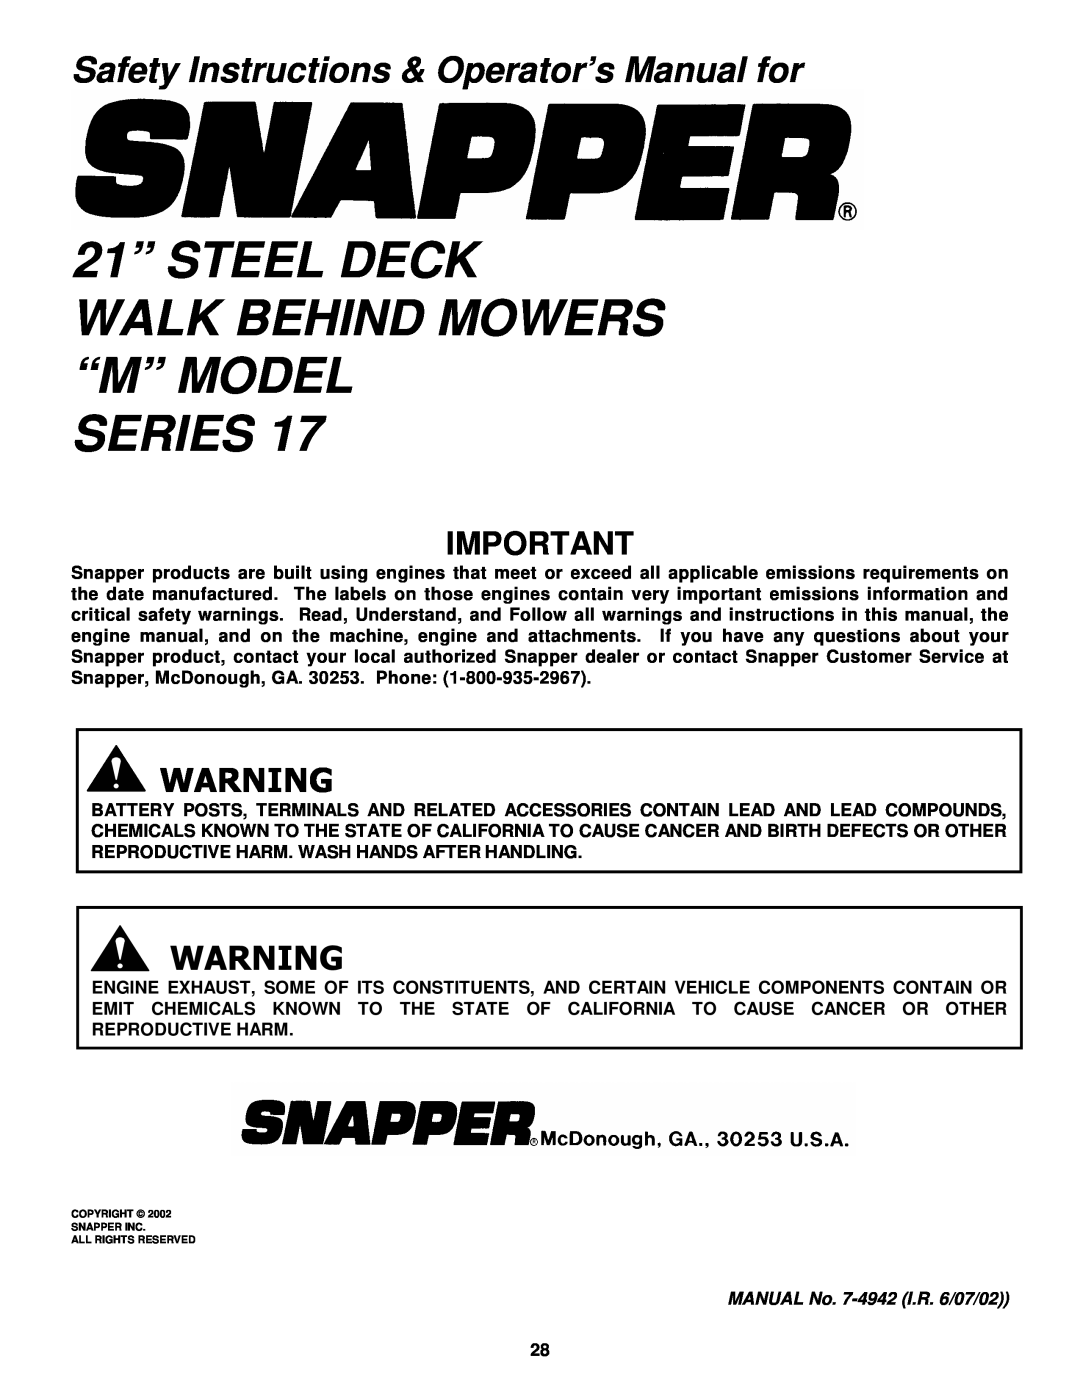 Snapper WMR216517B, WMRP216517B important safety instructions 21” STEEL DECK WALK BEHIND MOWERS “M” MODEL SERIES 